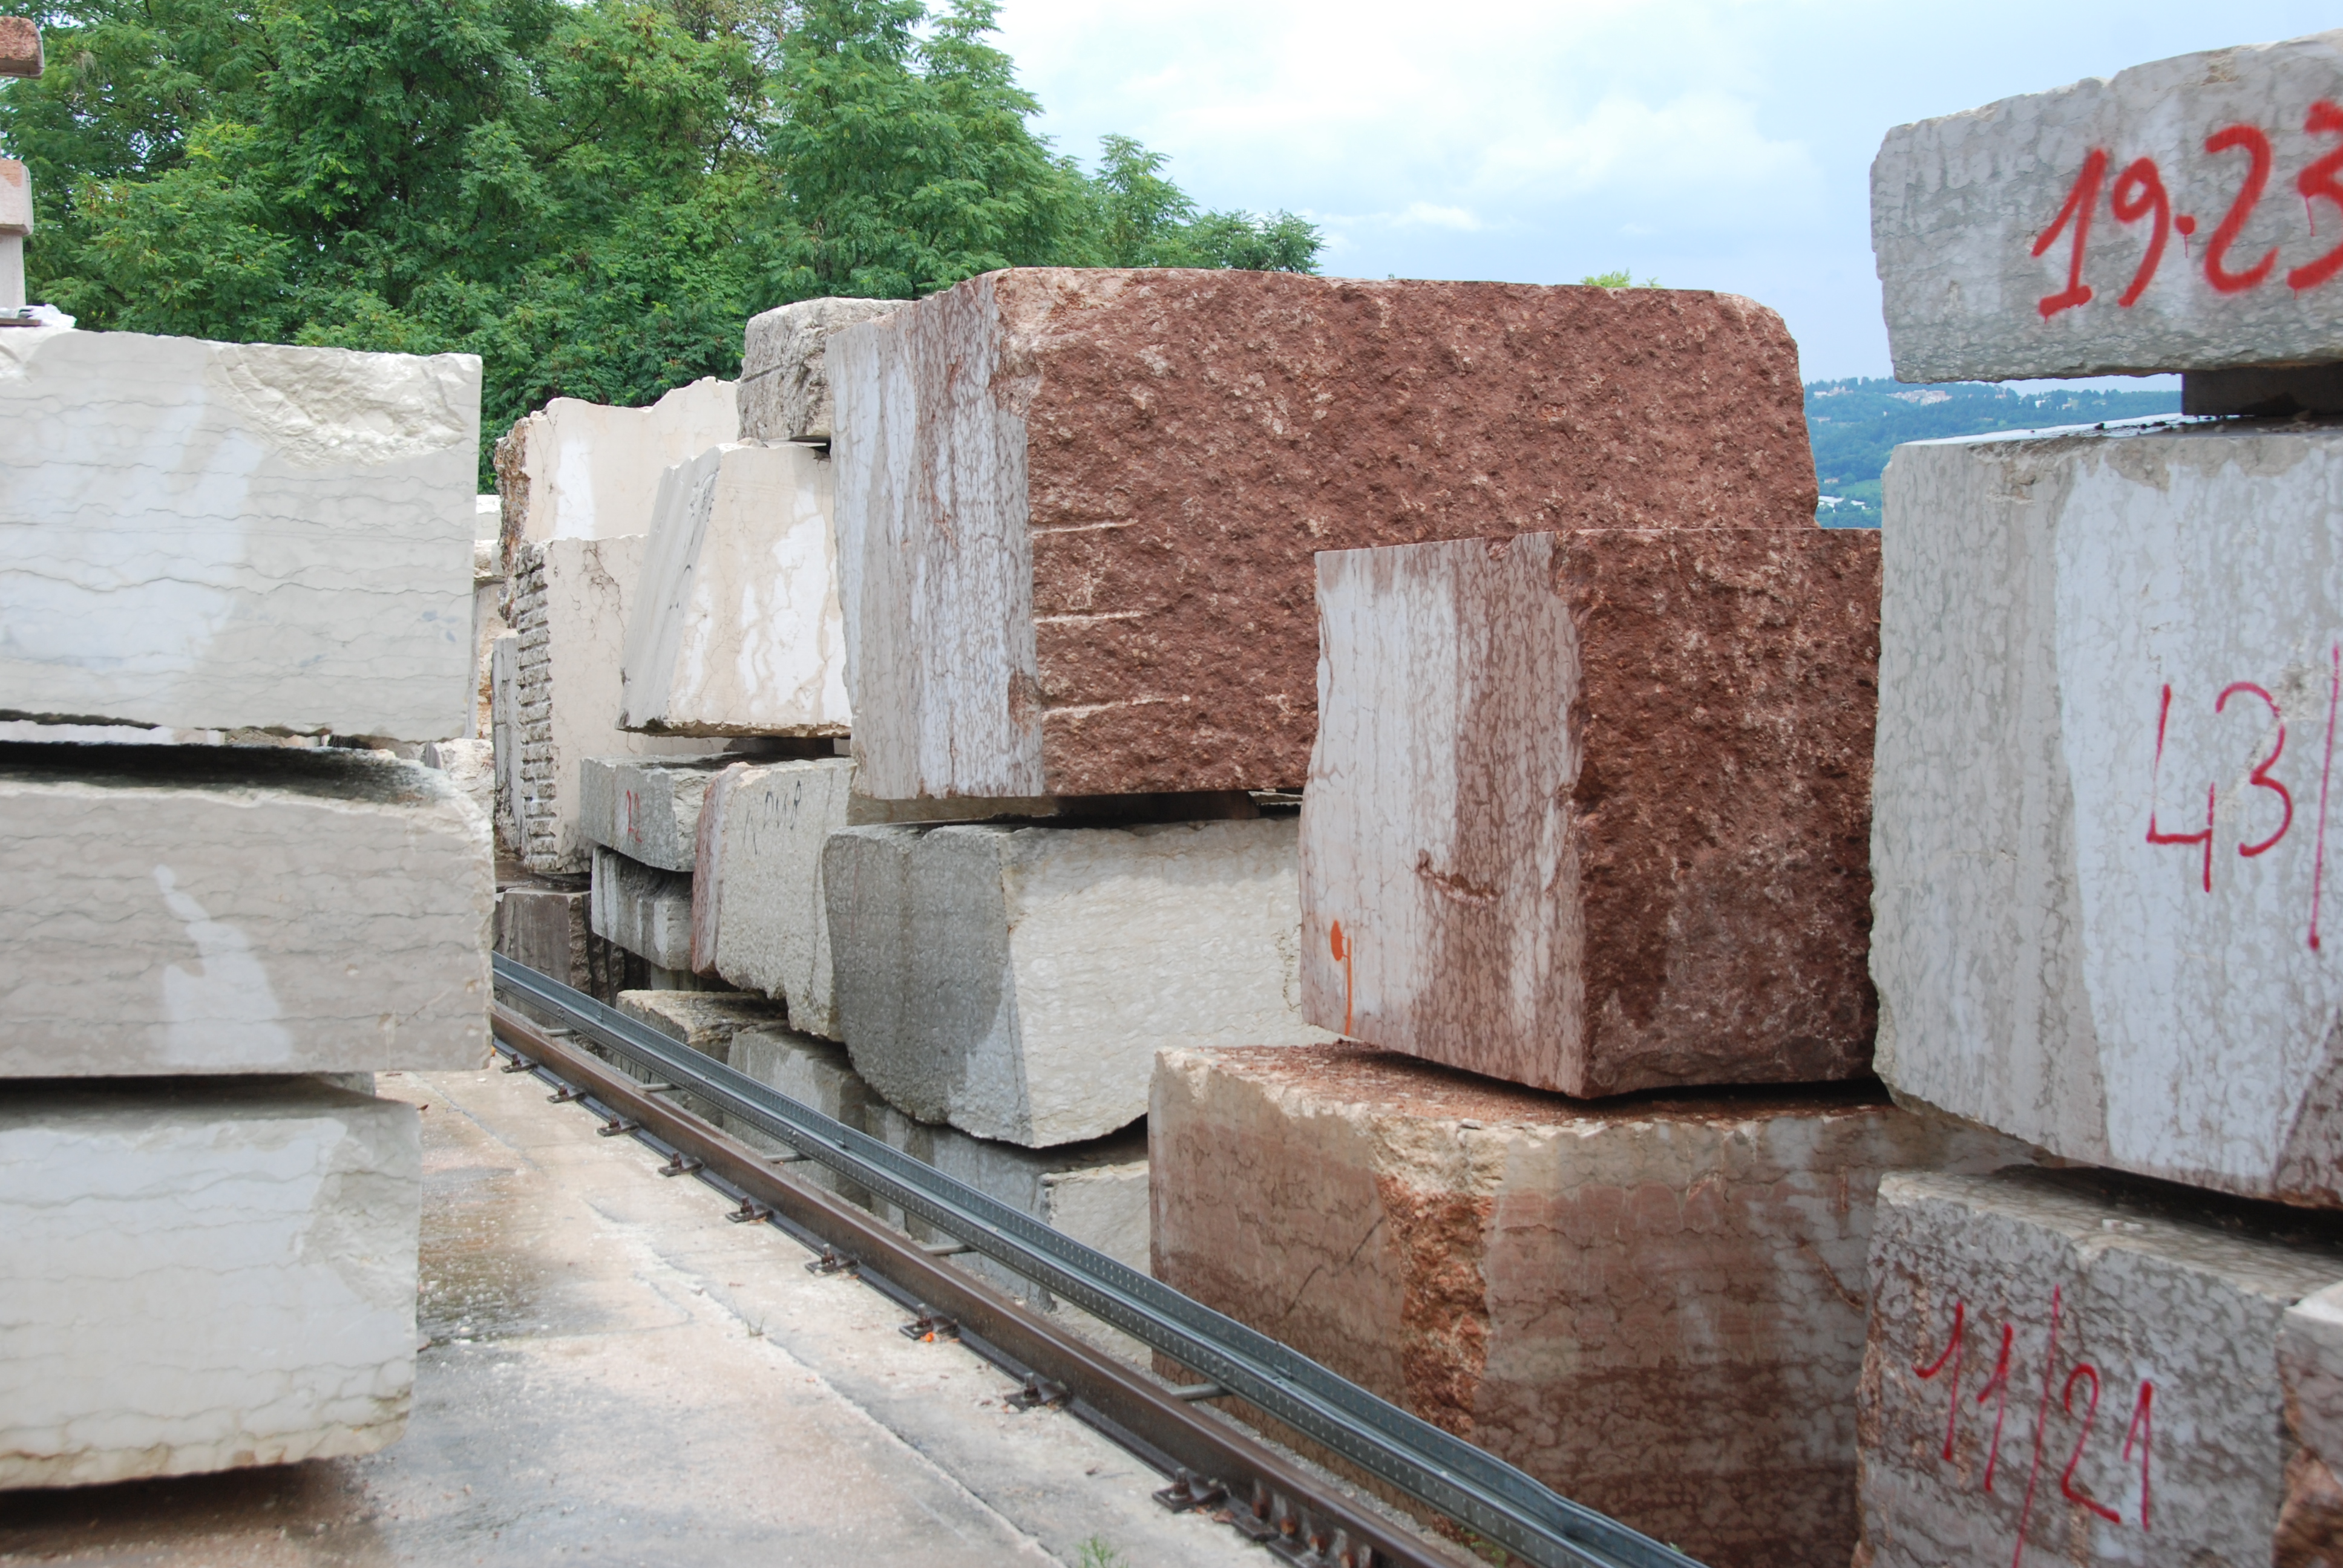 Afname Italiaanse natuursteenexport